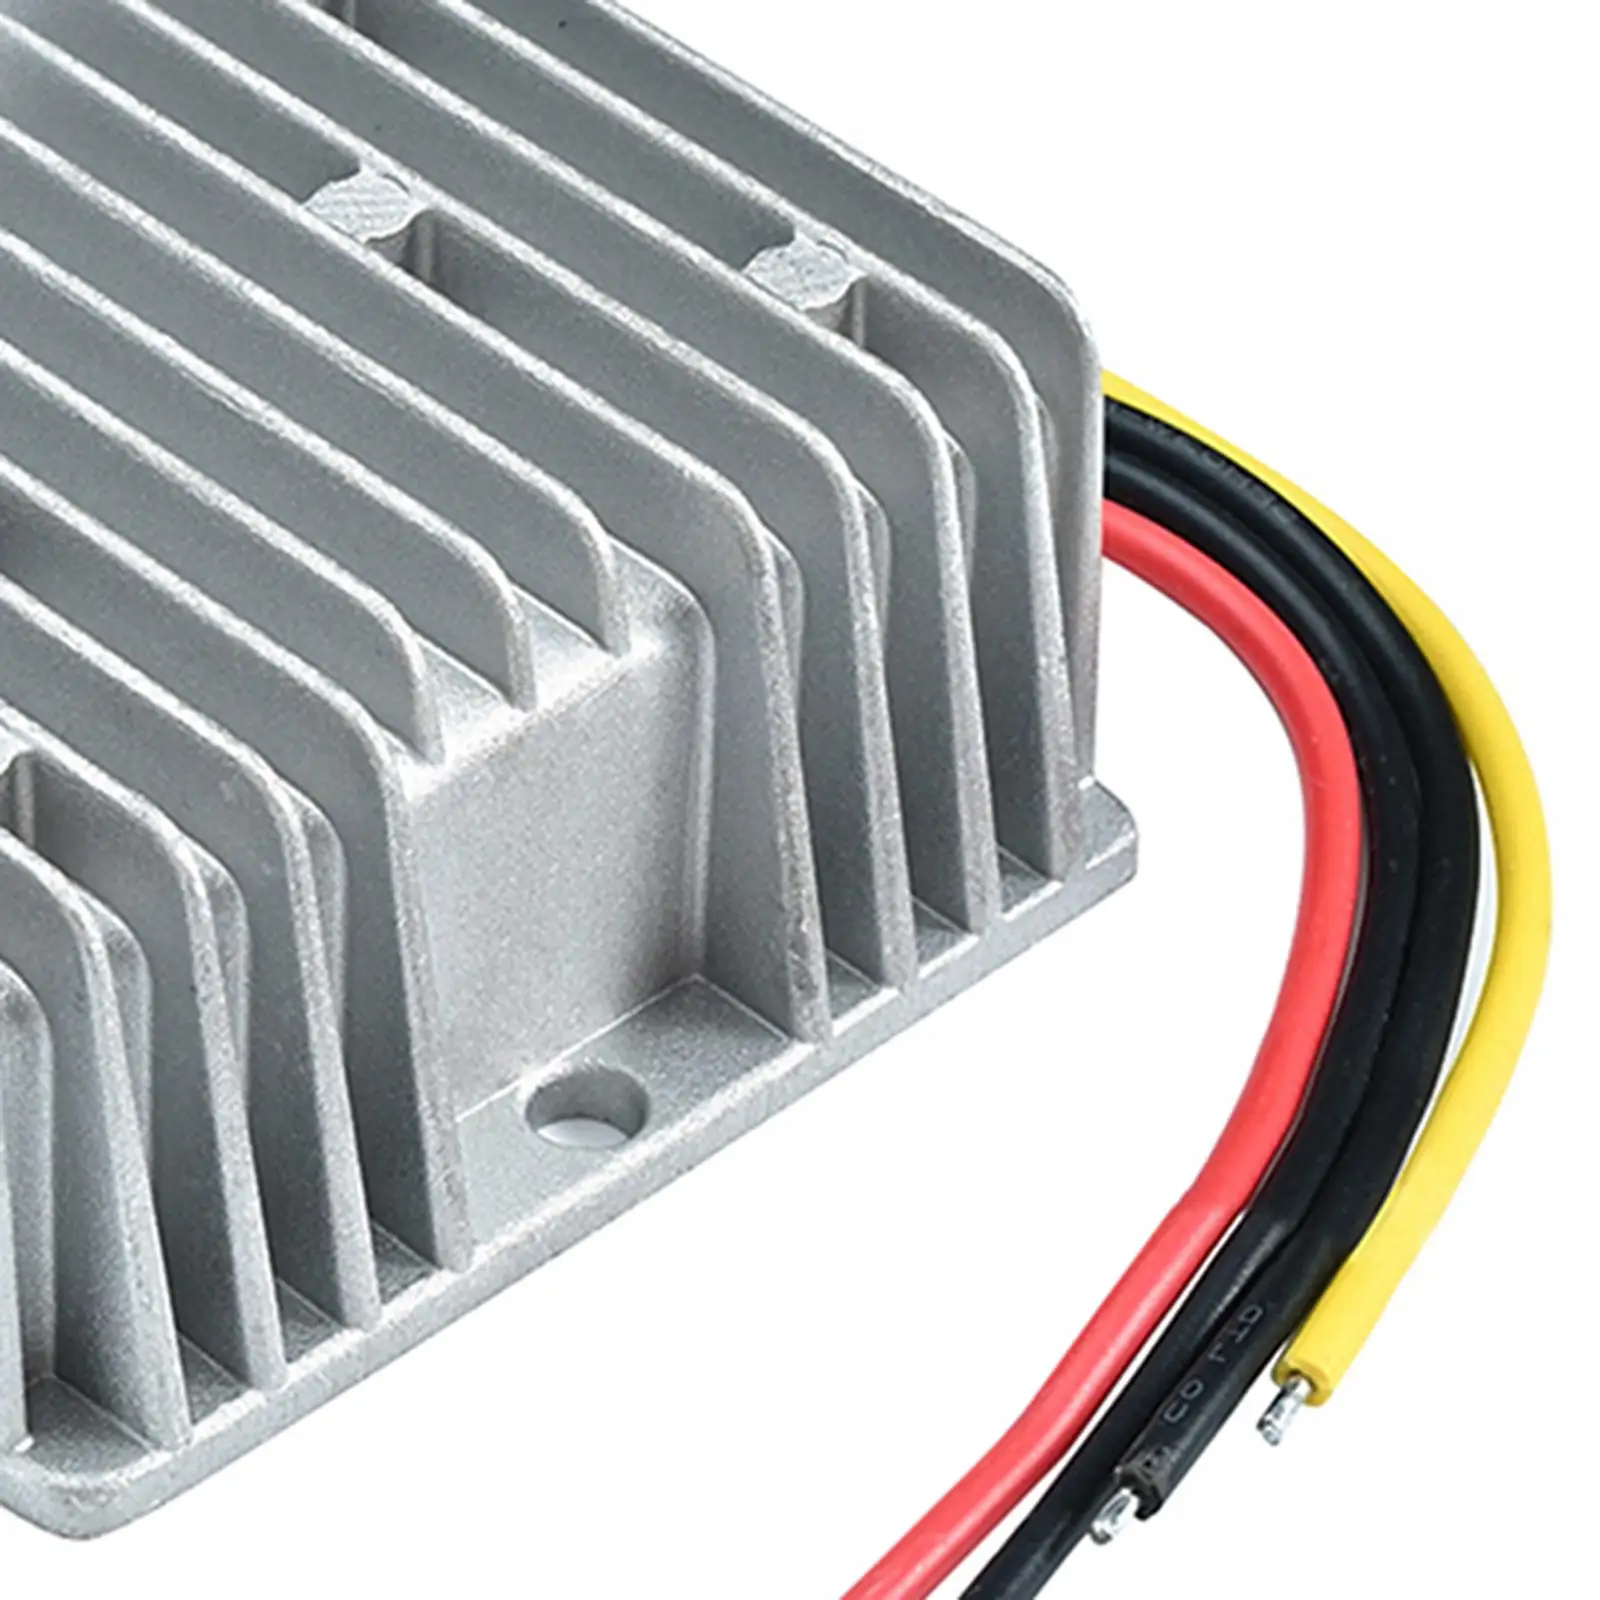 Converter Module Replaces Heat Dissipation DC Voltage Converter for Audio Cart